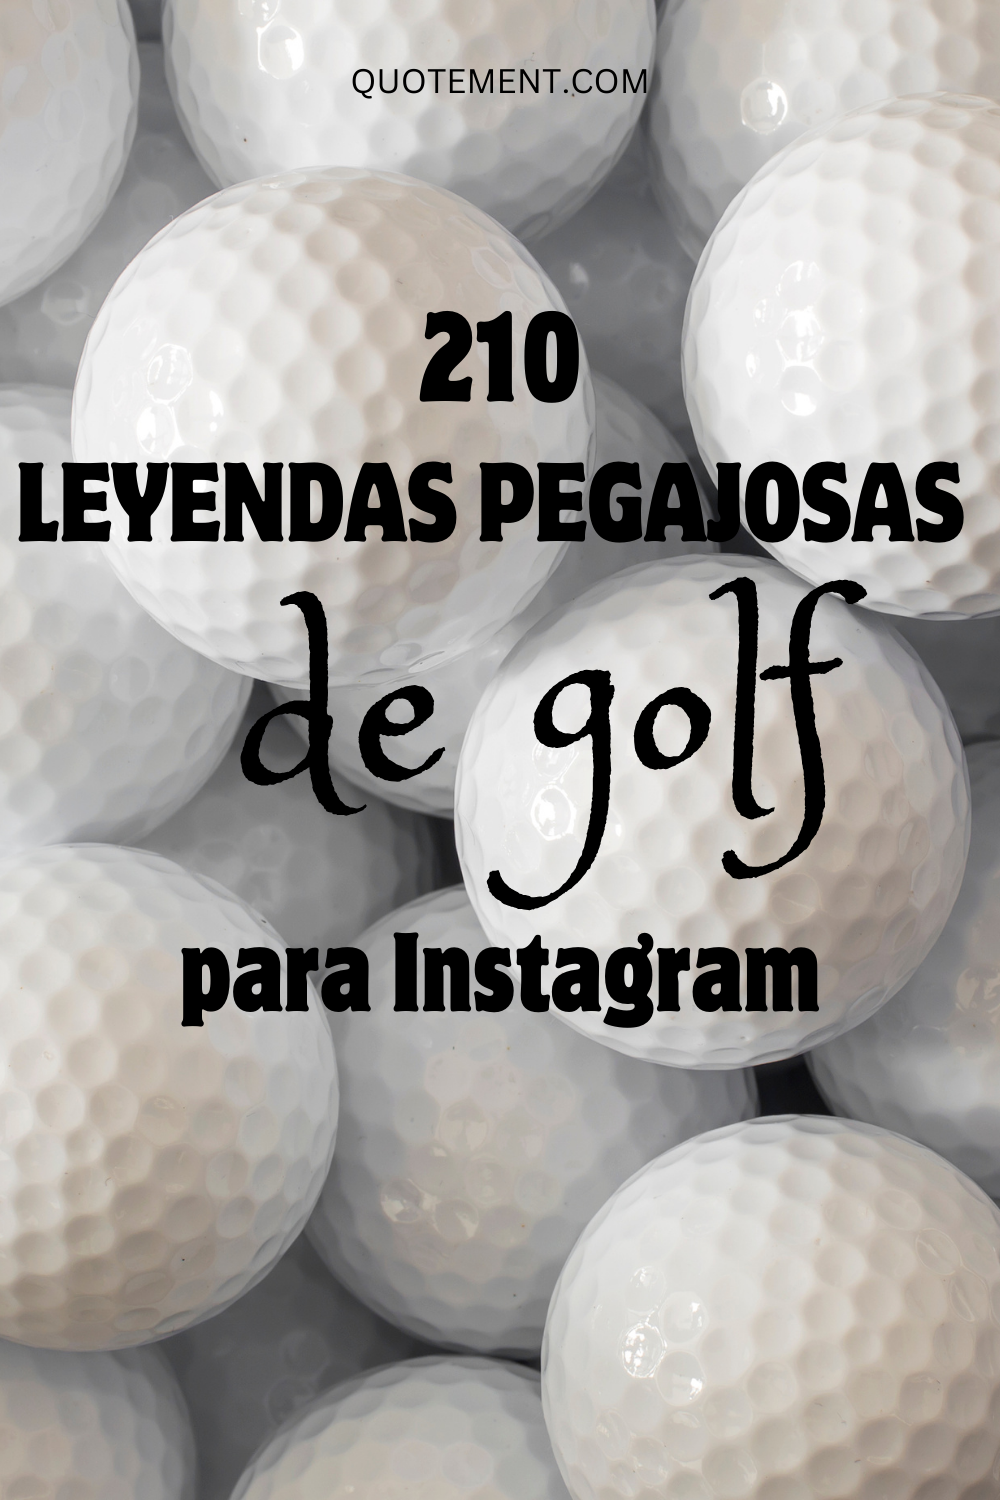 210 leyendas de golf que impresionarán a todos los golfistas